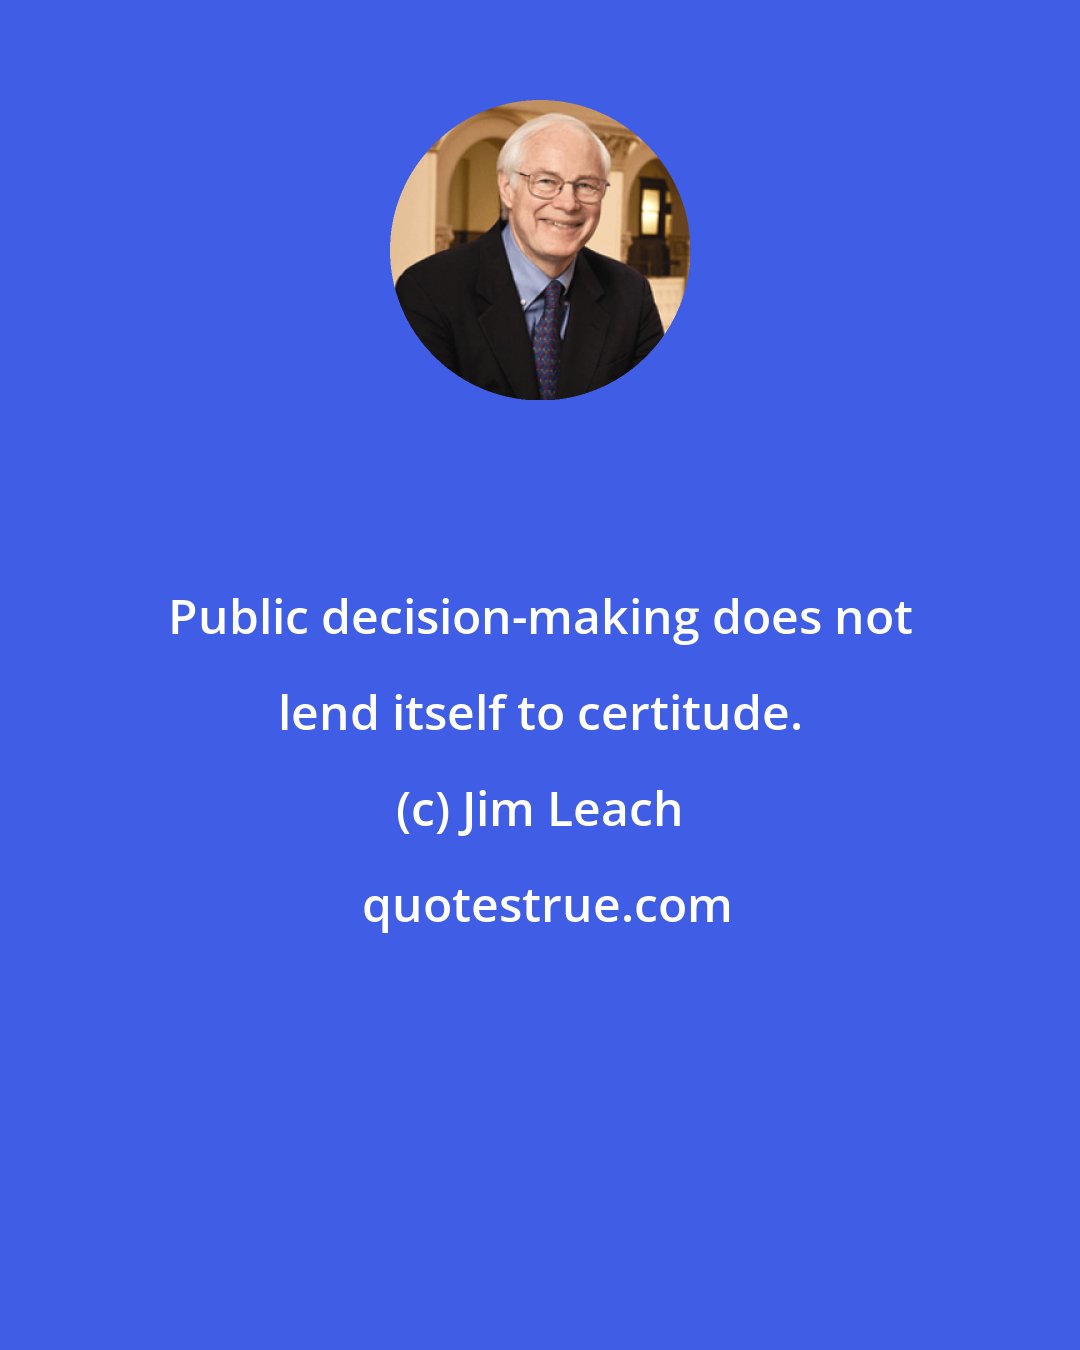 Jim Leach: Public decision-making does not lend itself to certitude.